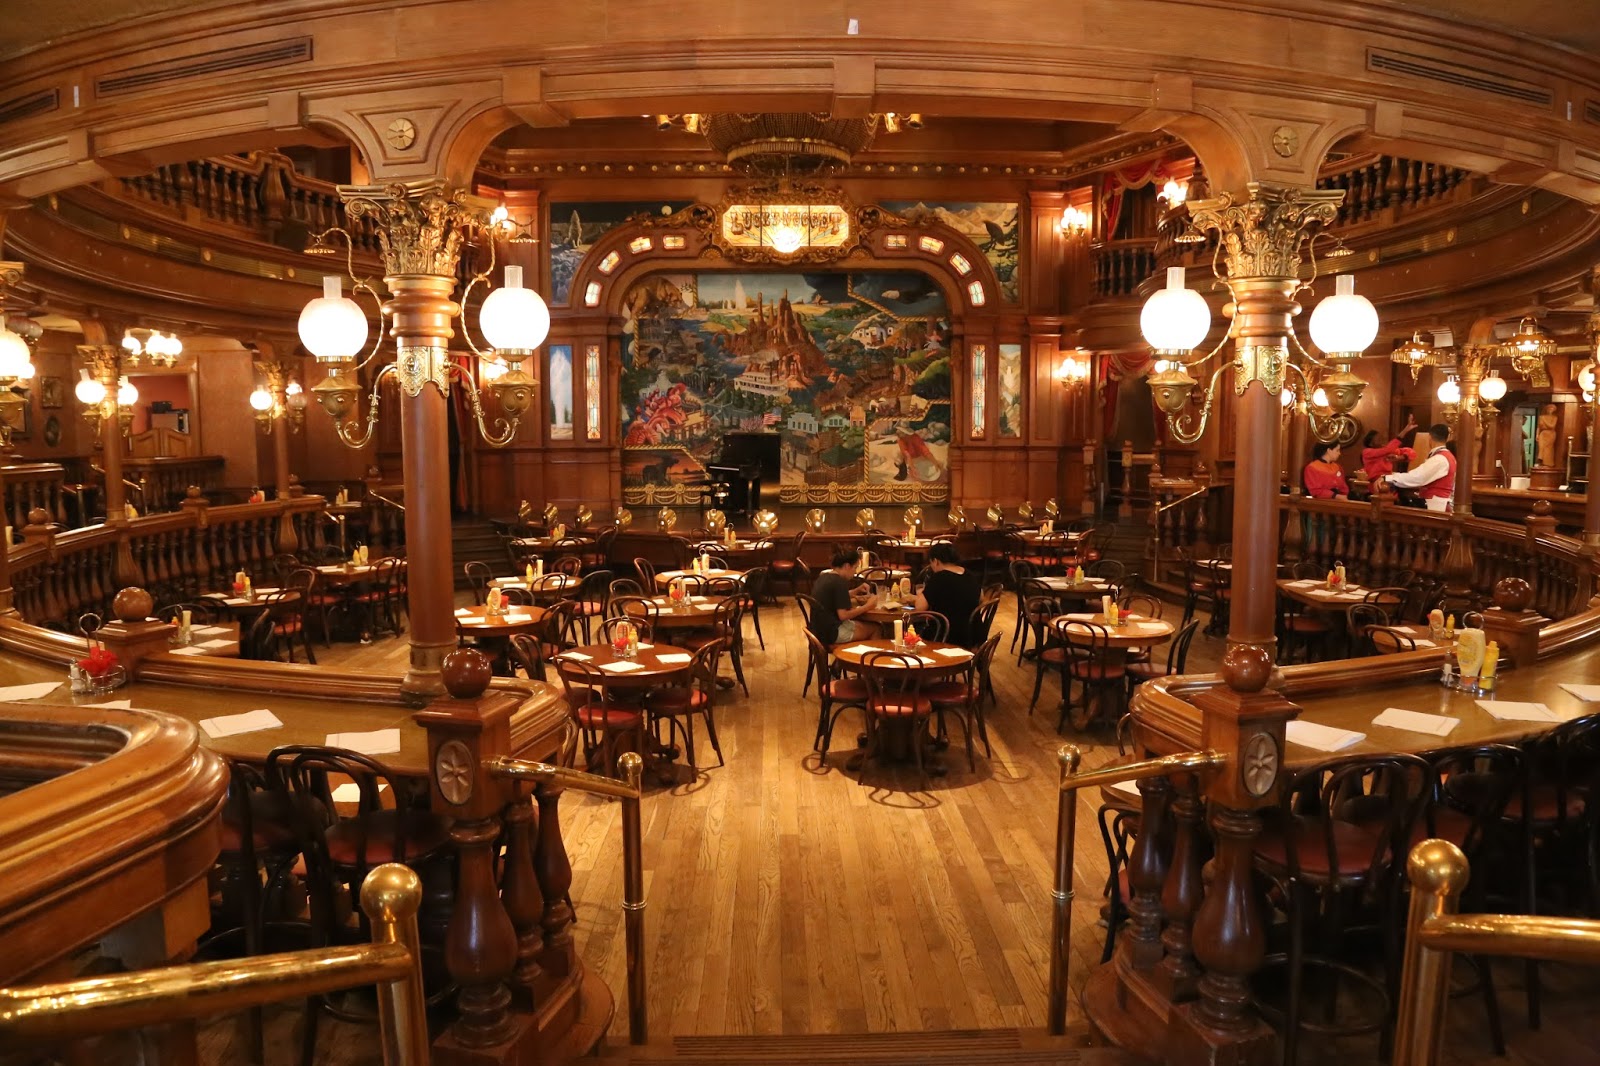 The Lucky Nugget Saloon - Classic Restaurant at Disneyland Paris